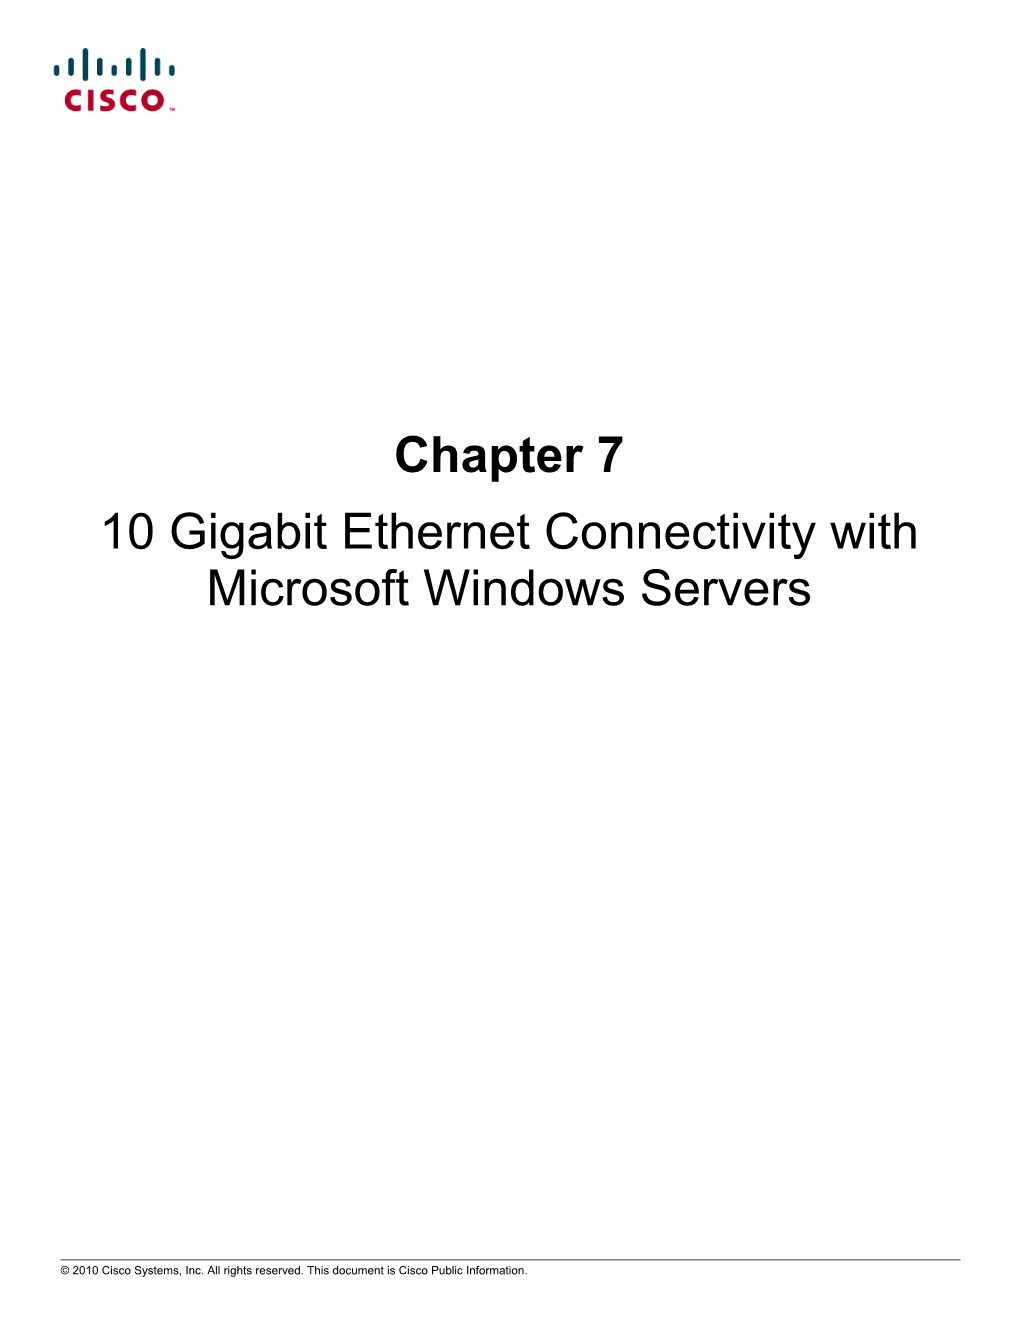 10 Gigabit Ethernet Connectivity with Microsoft Windows Servers